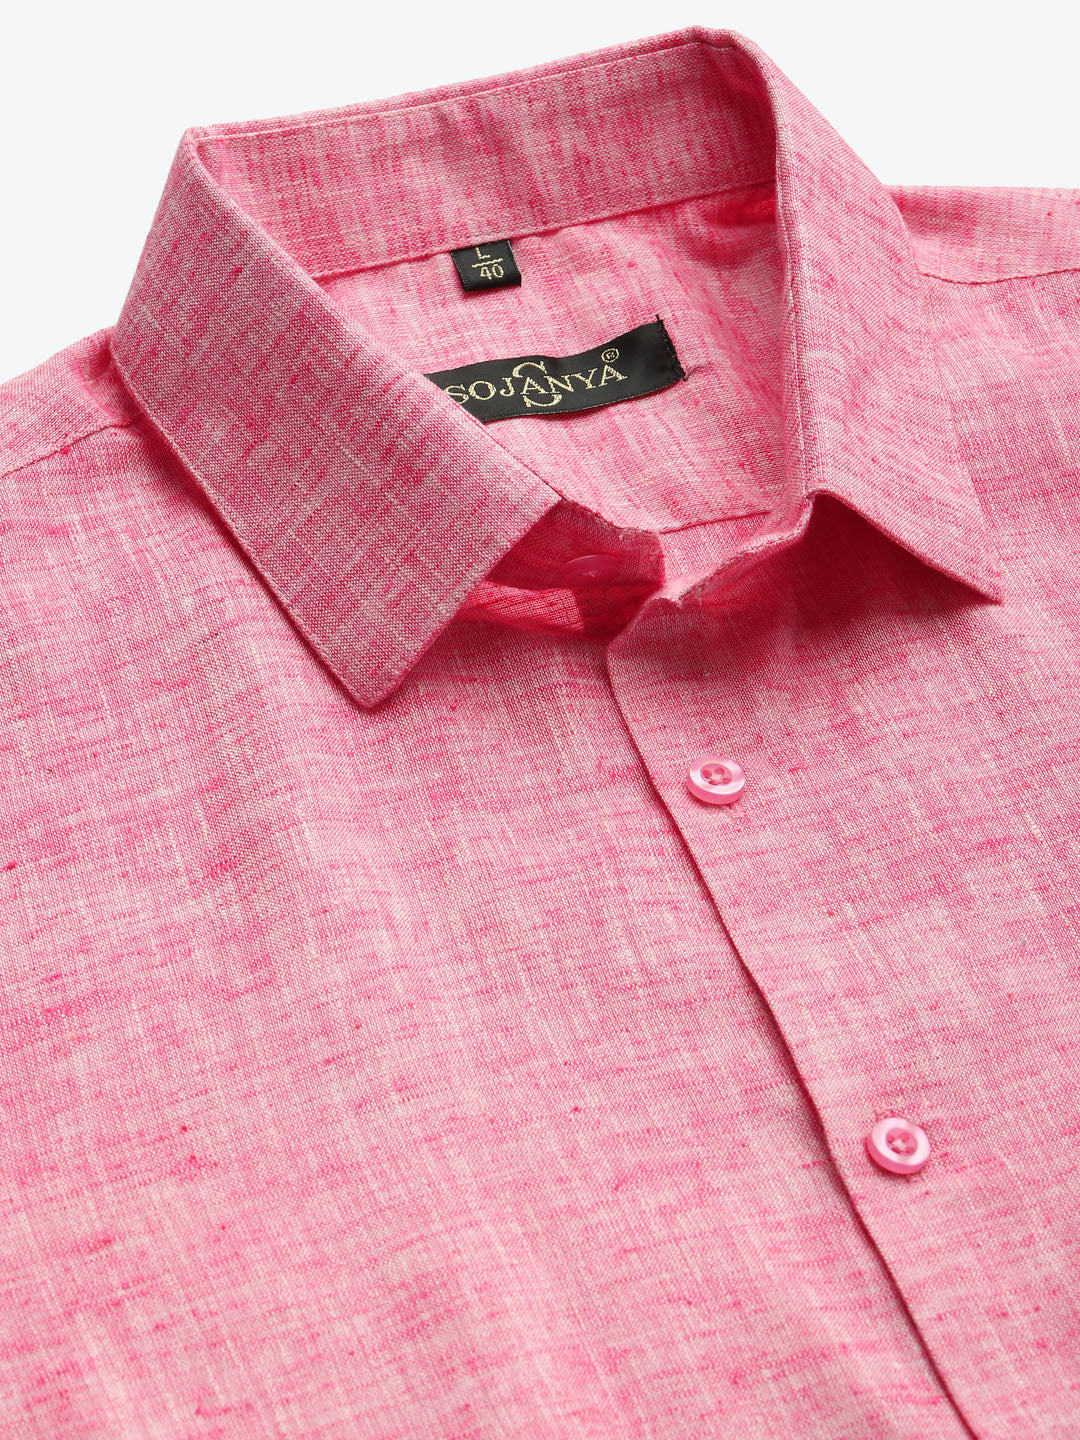 Men's Cotton Blend Pink Half sleeves Casual Shirt